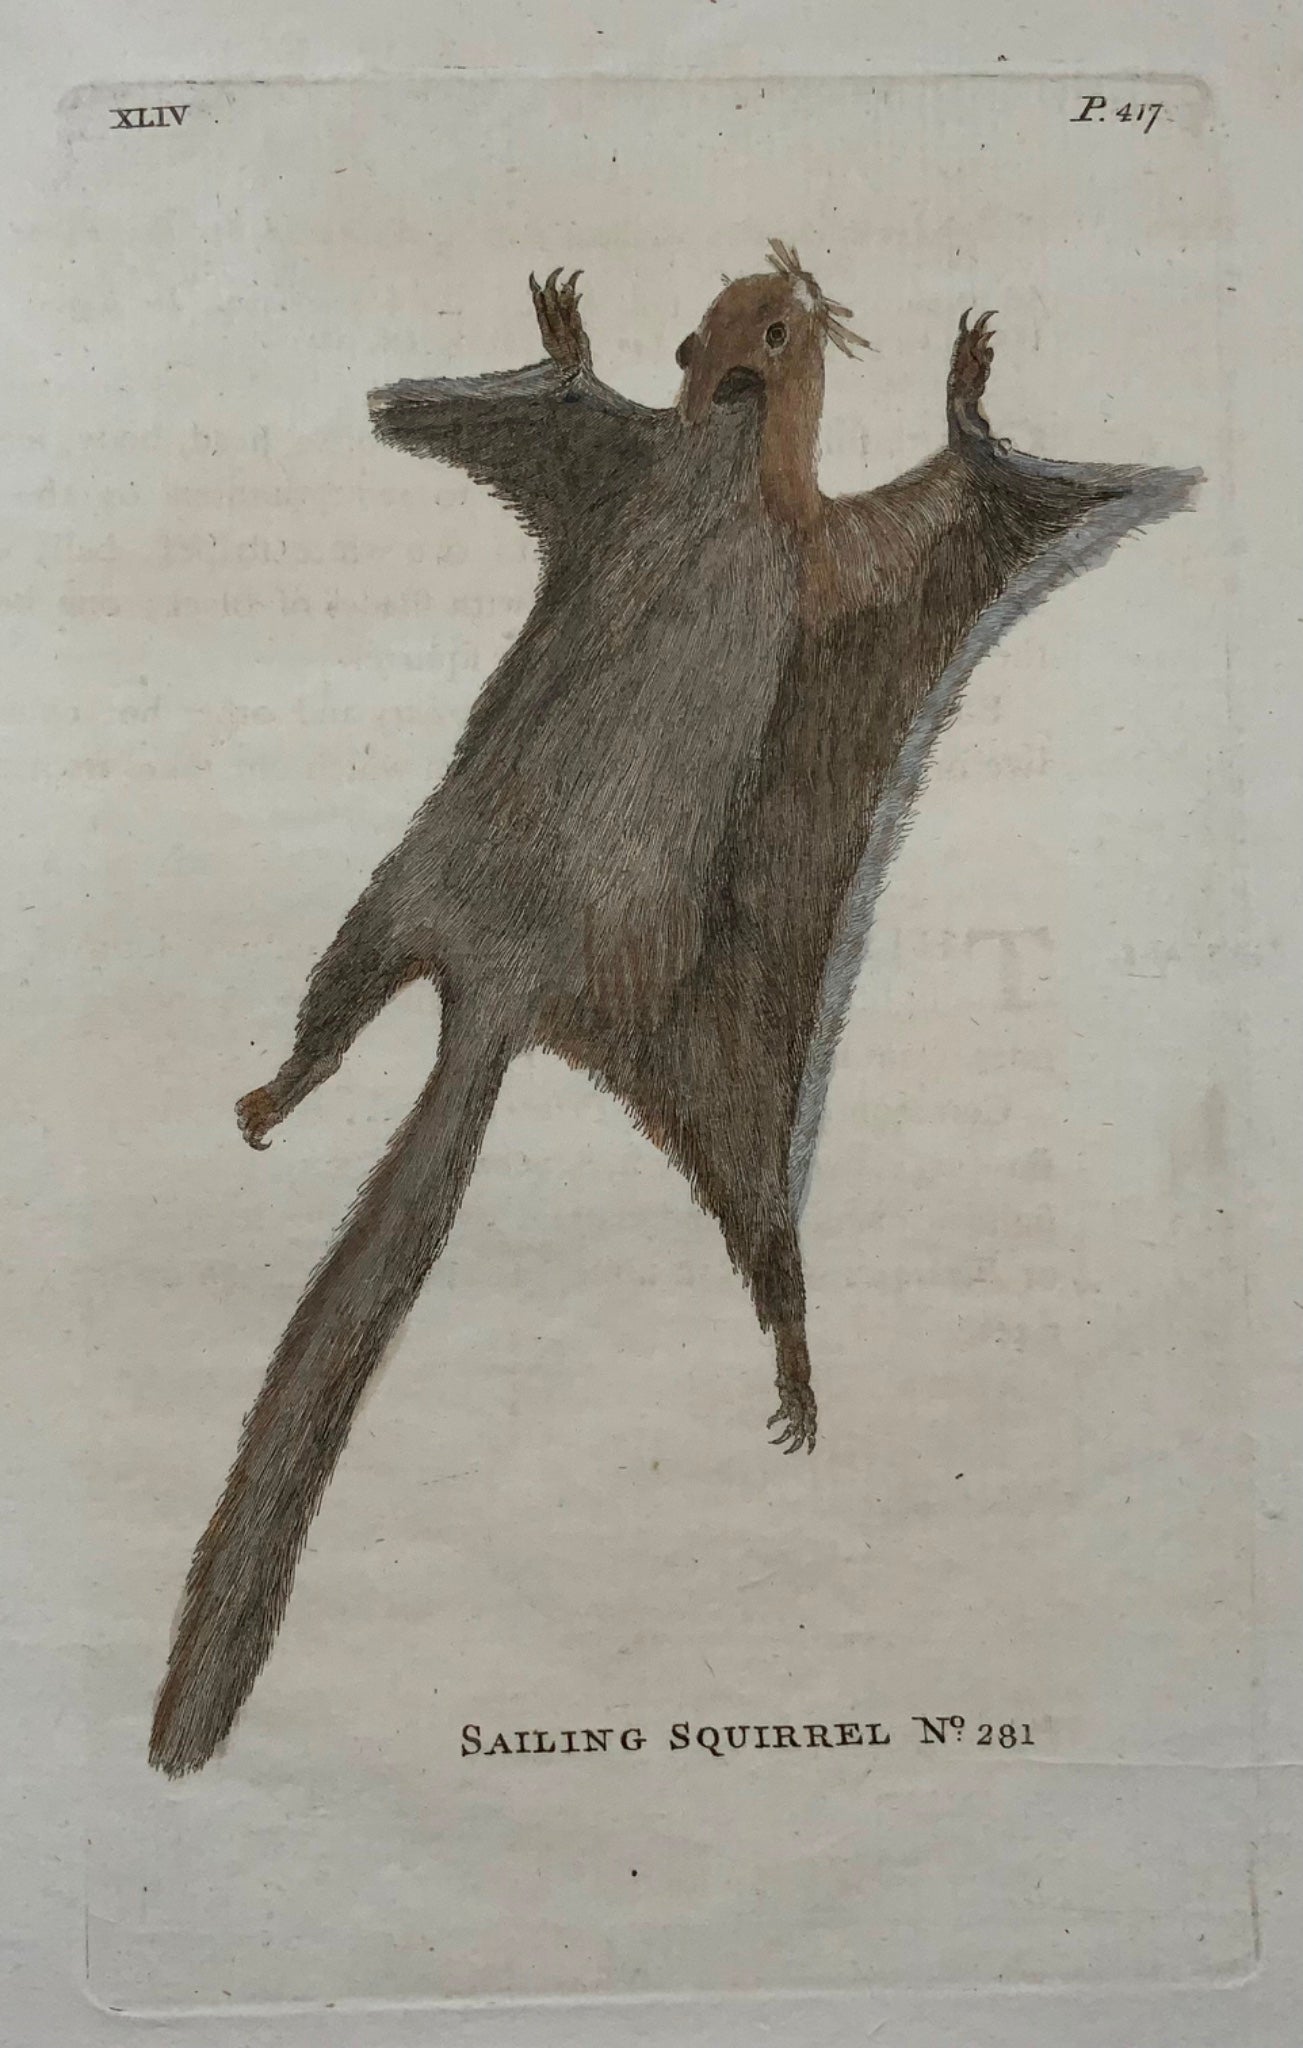 1777 Flying Squirrel, Th. Pennant, Quarto, hand coloured, mammal